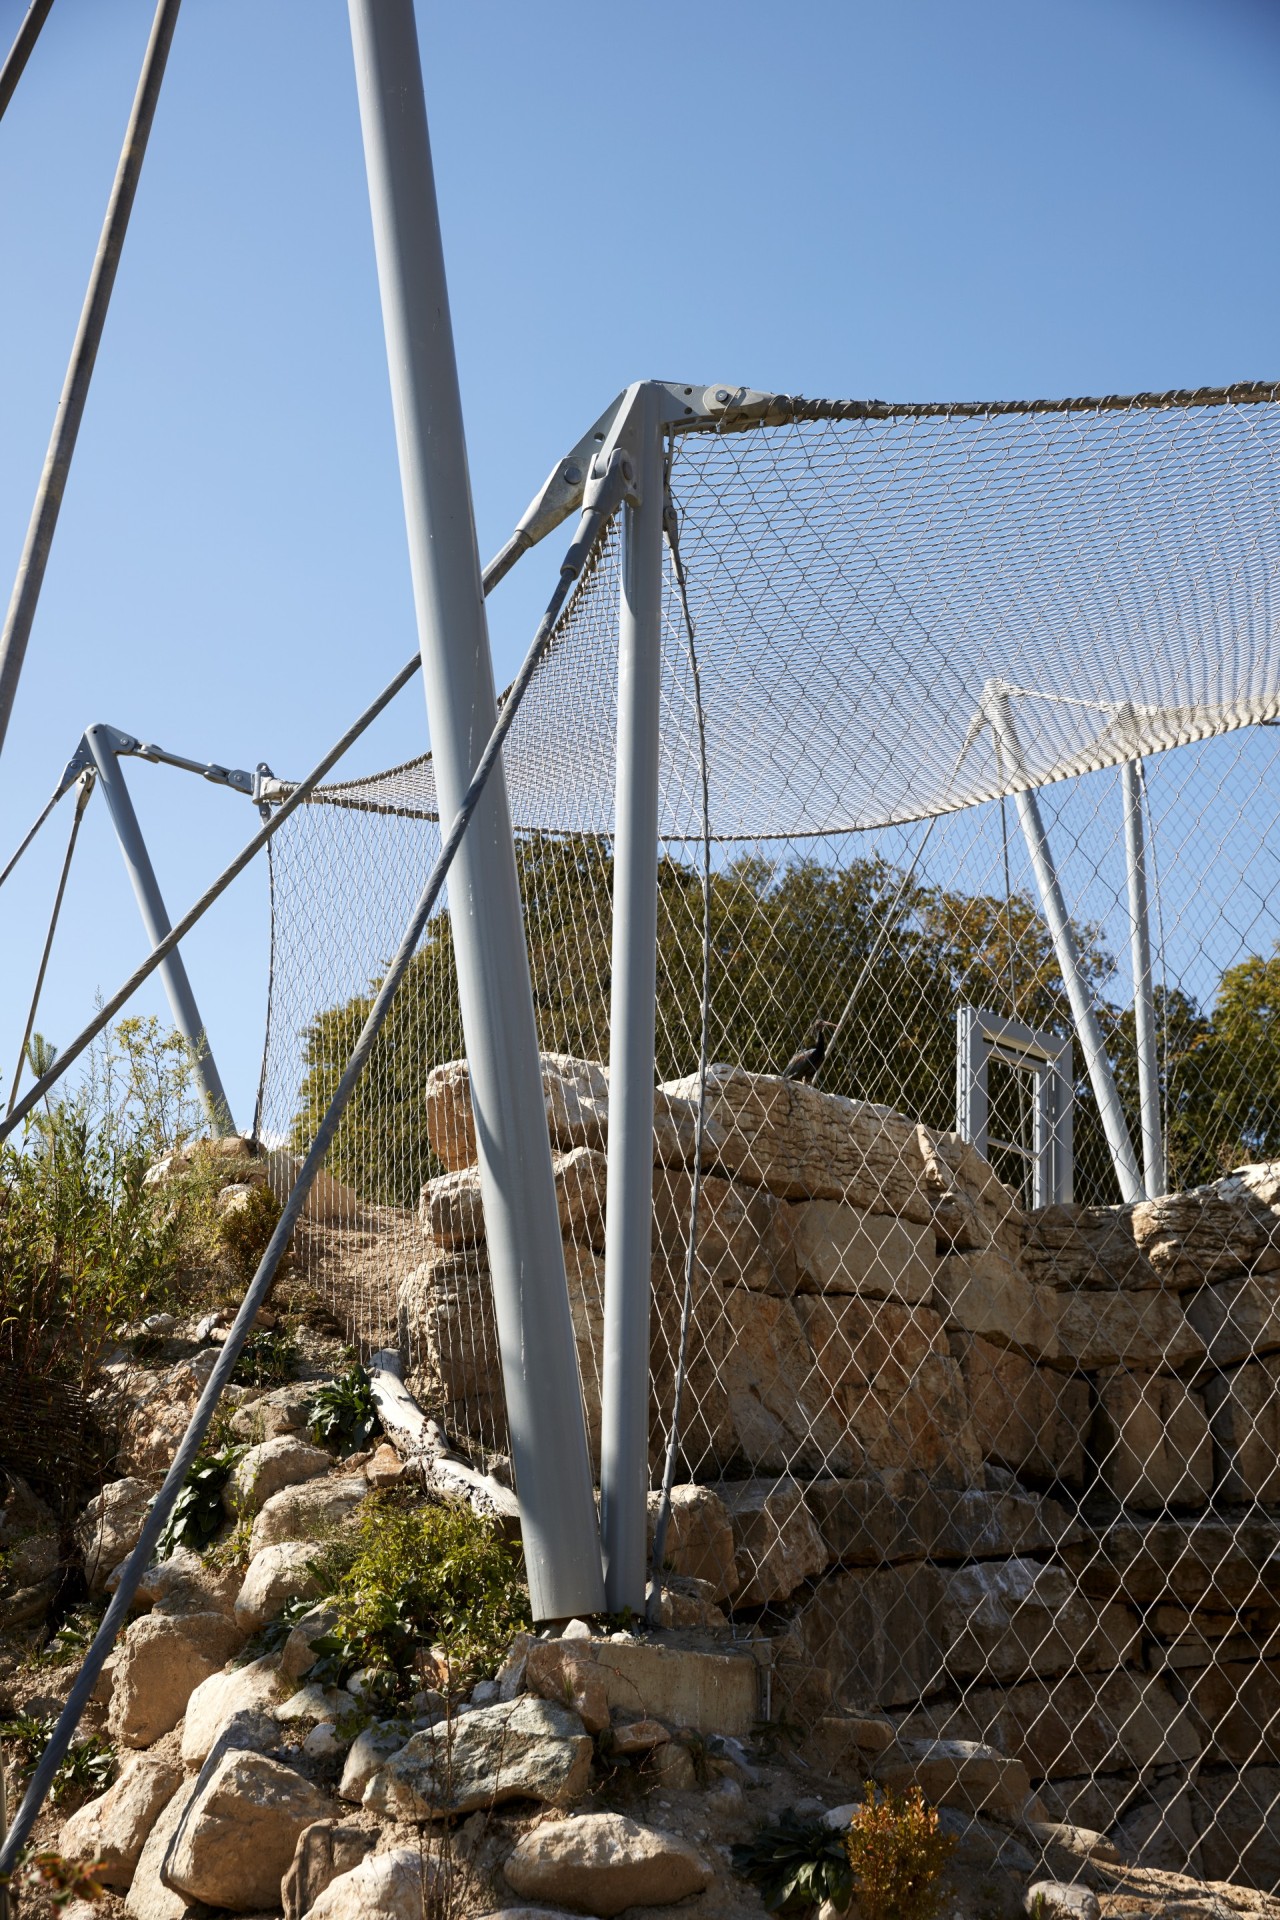 Steel rope an d mesh consturction as enclosure at La Garenne